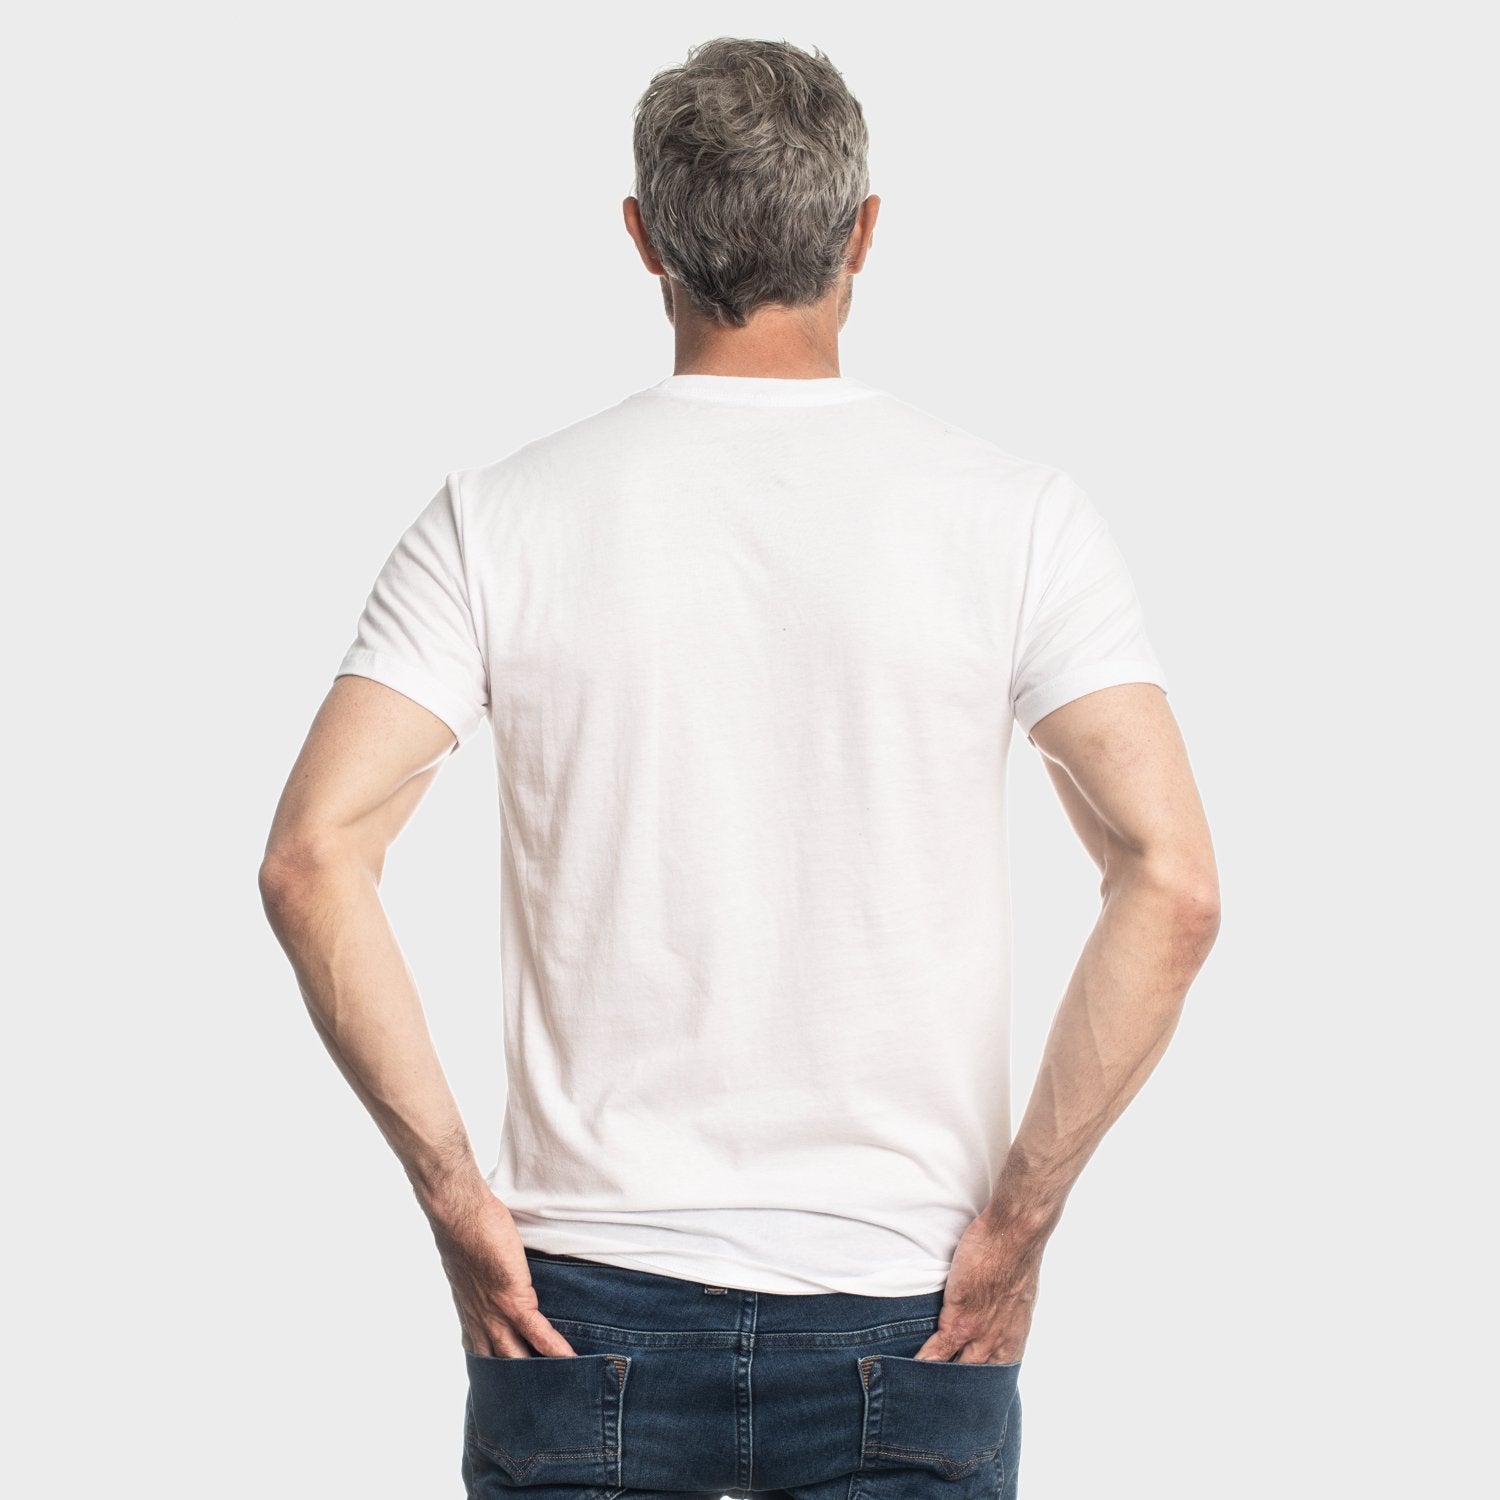 White T-Shirt With Pocket | Men's White Pocket T-Shirt | True Classic